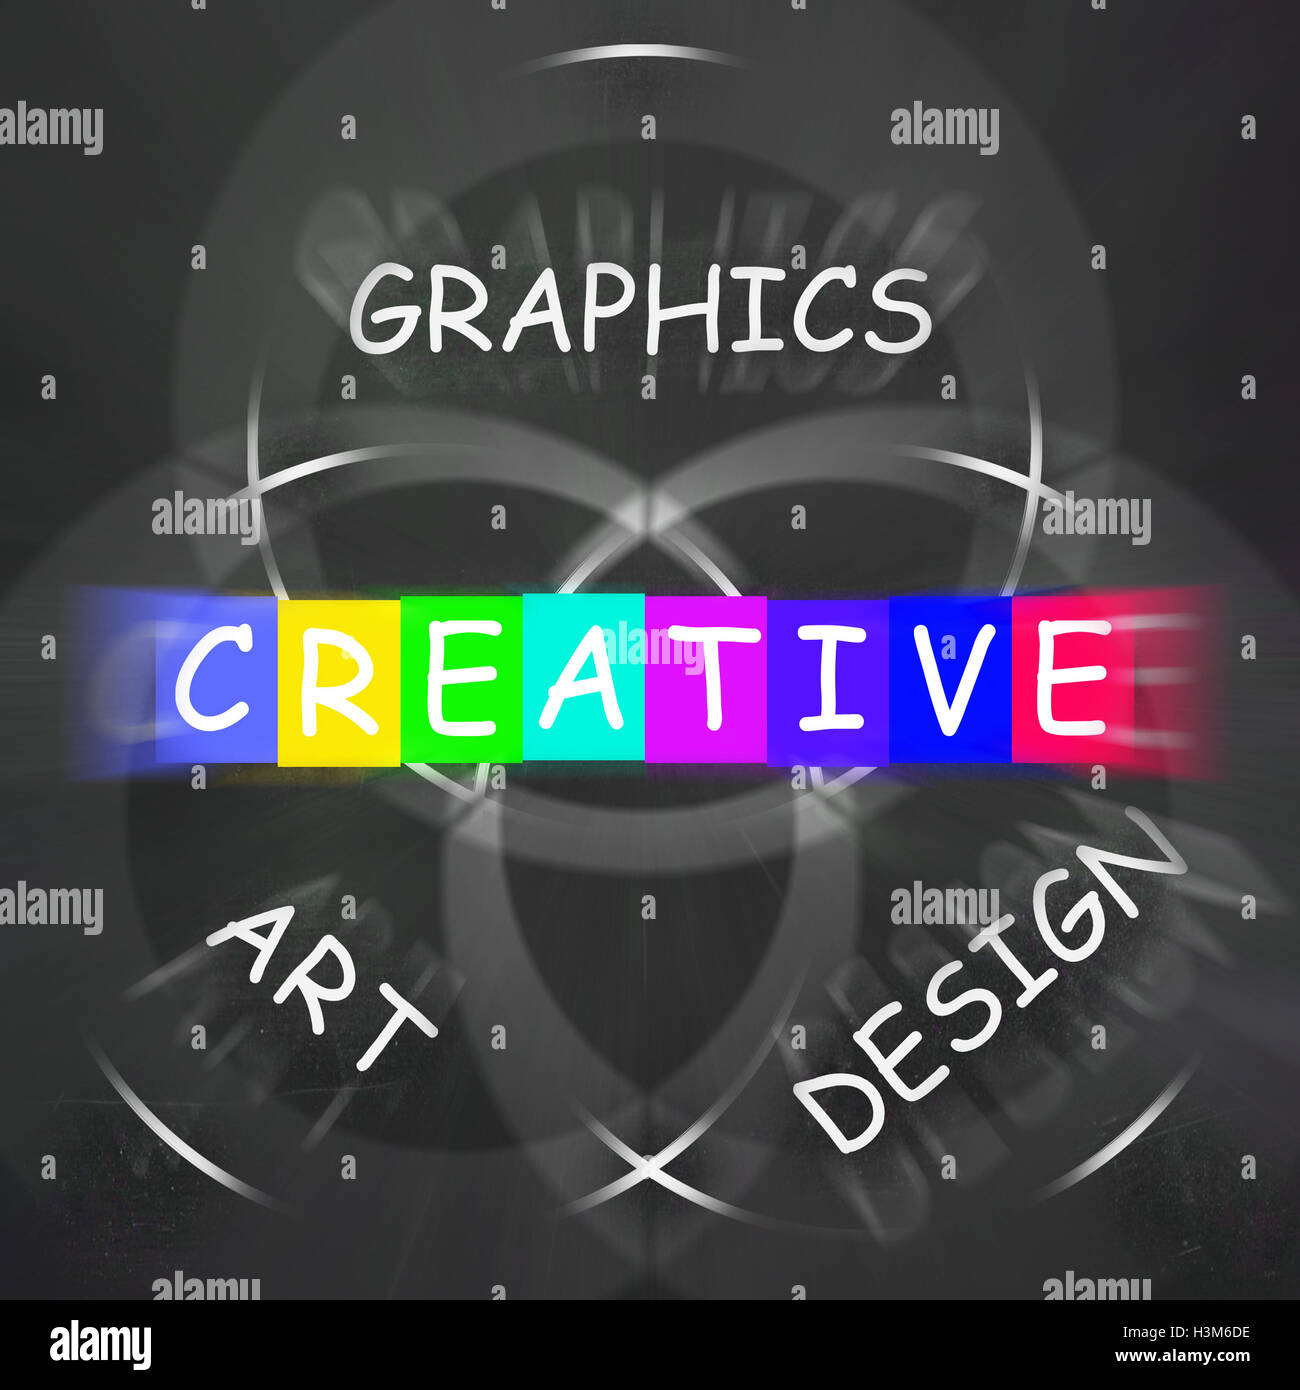 Creative Choices Displays Graphics Art Design and Creativity Stock Photo